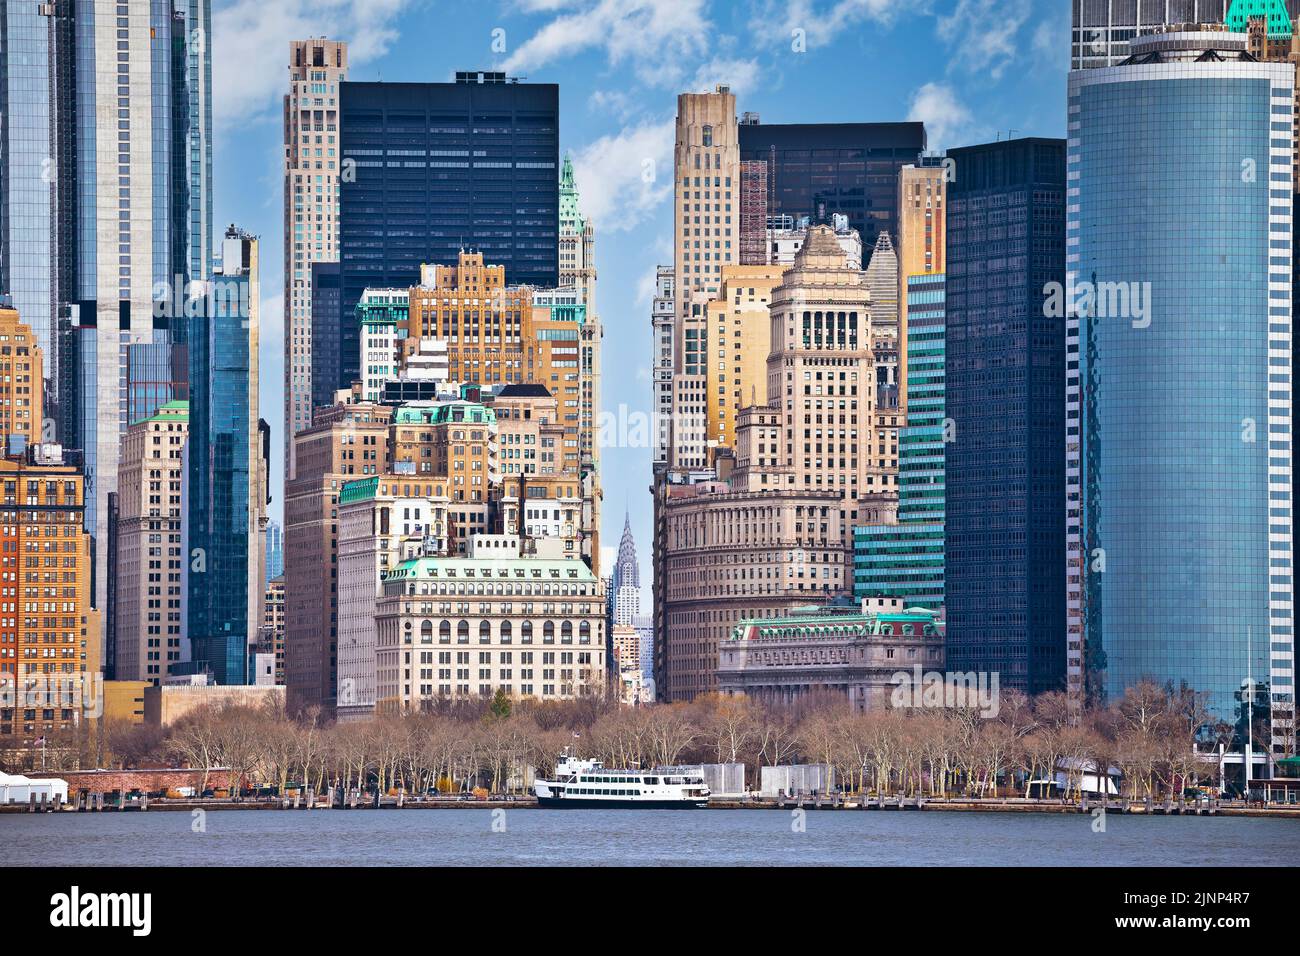 New York City downtown dense skyline view, United States of America Stock Photo